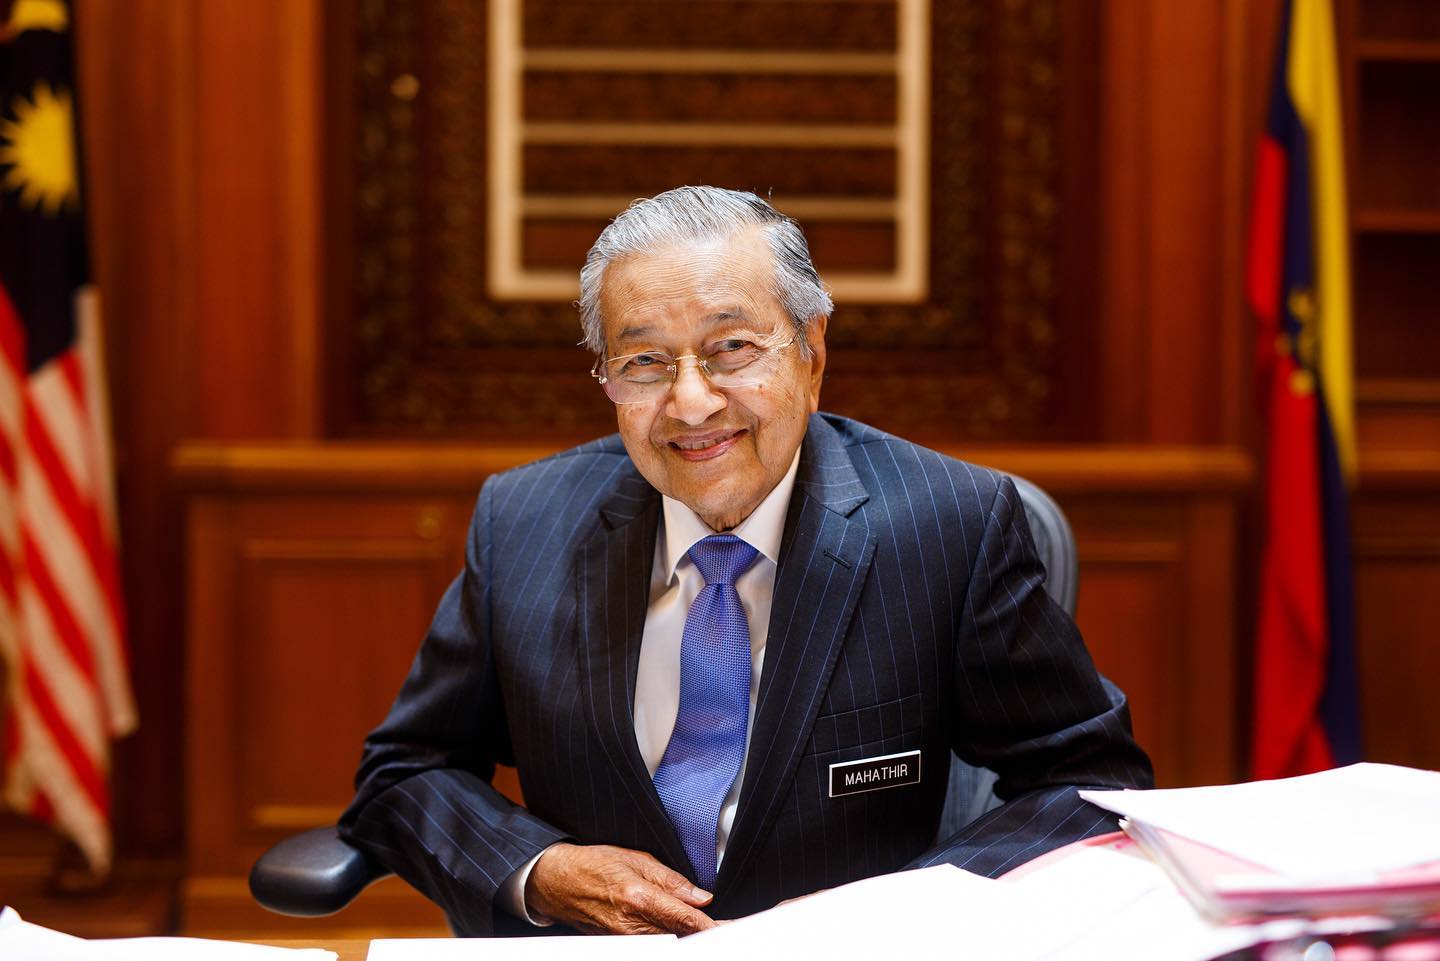 Премьер малайзии. Премьер-министр Малайзии Махатхир Мохамад. Махатхир Бин Мохамад Искандар. Махатхир Мохамад 2022. Махатхир Мохамад премьер-министр Малайзии фото.